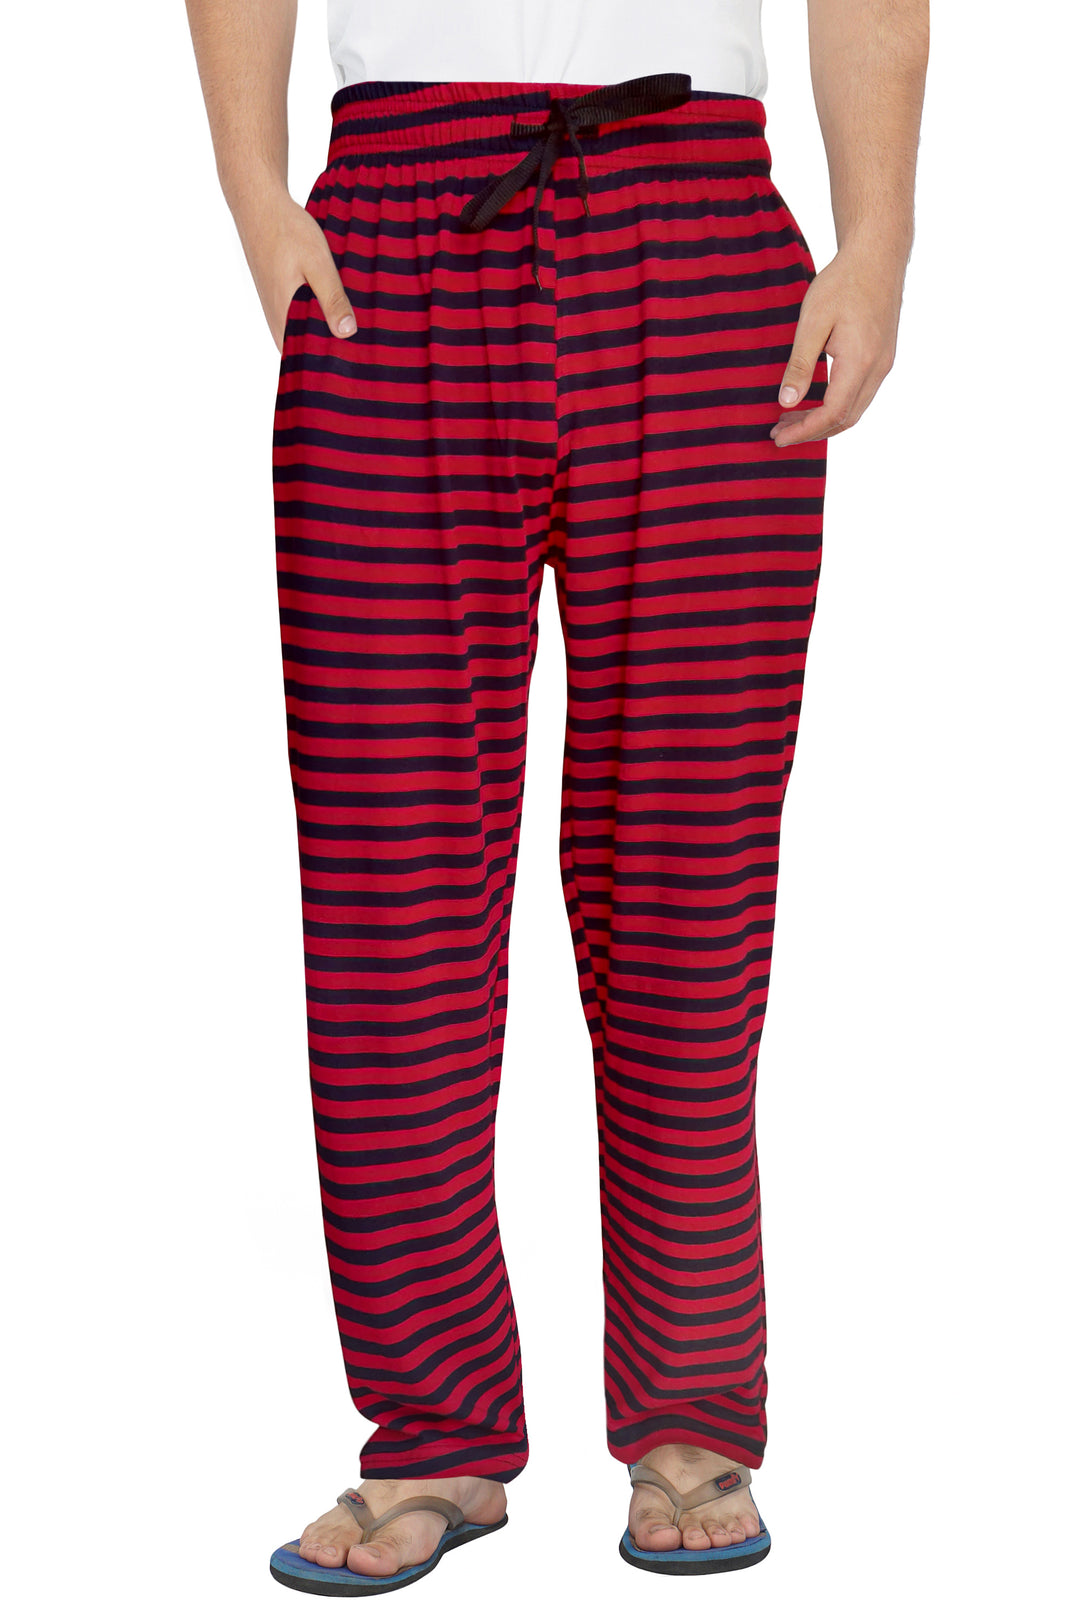 Black and Red Check Pyjama